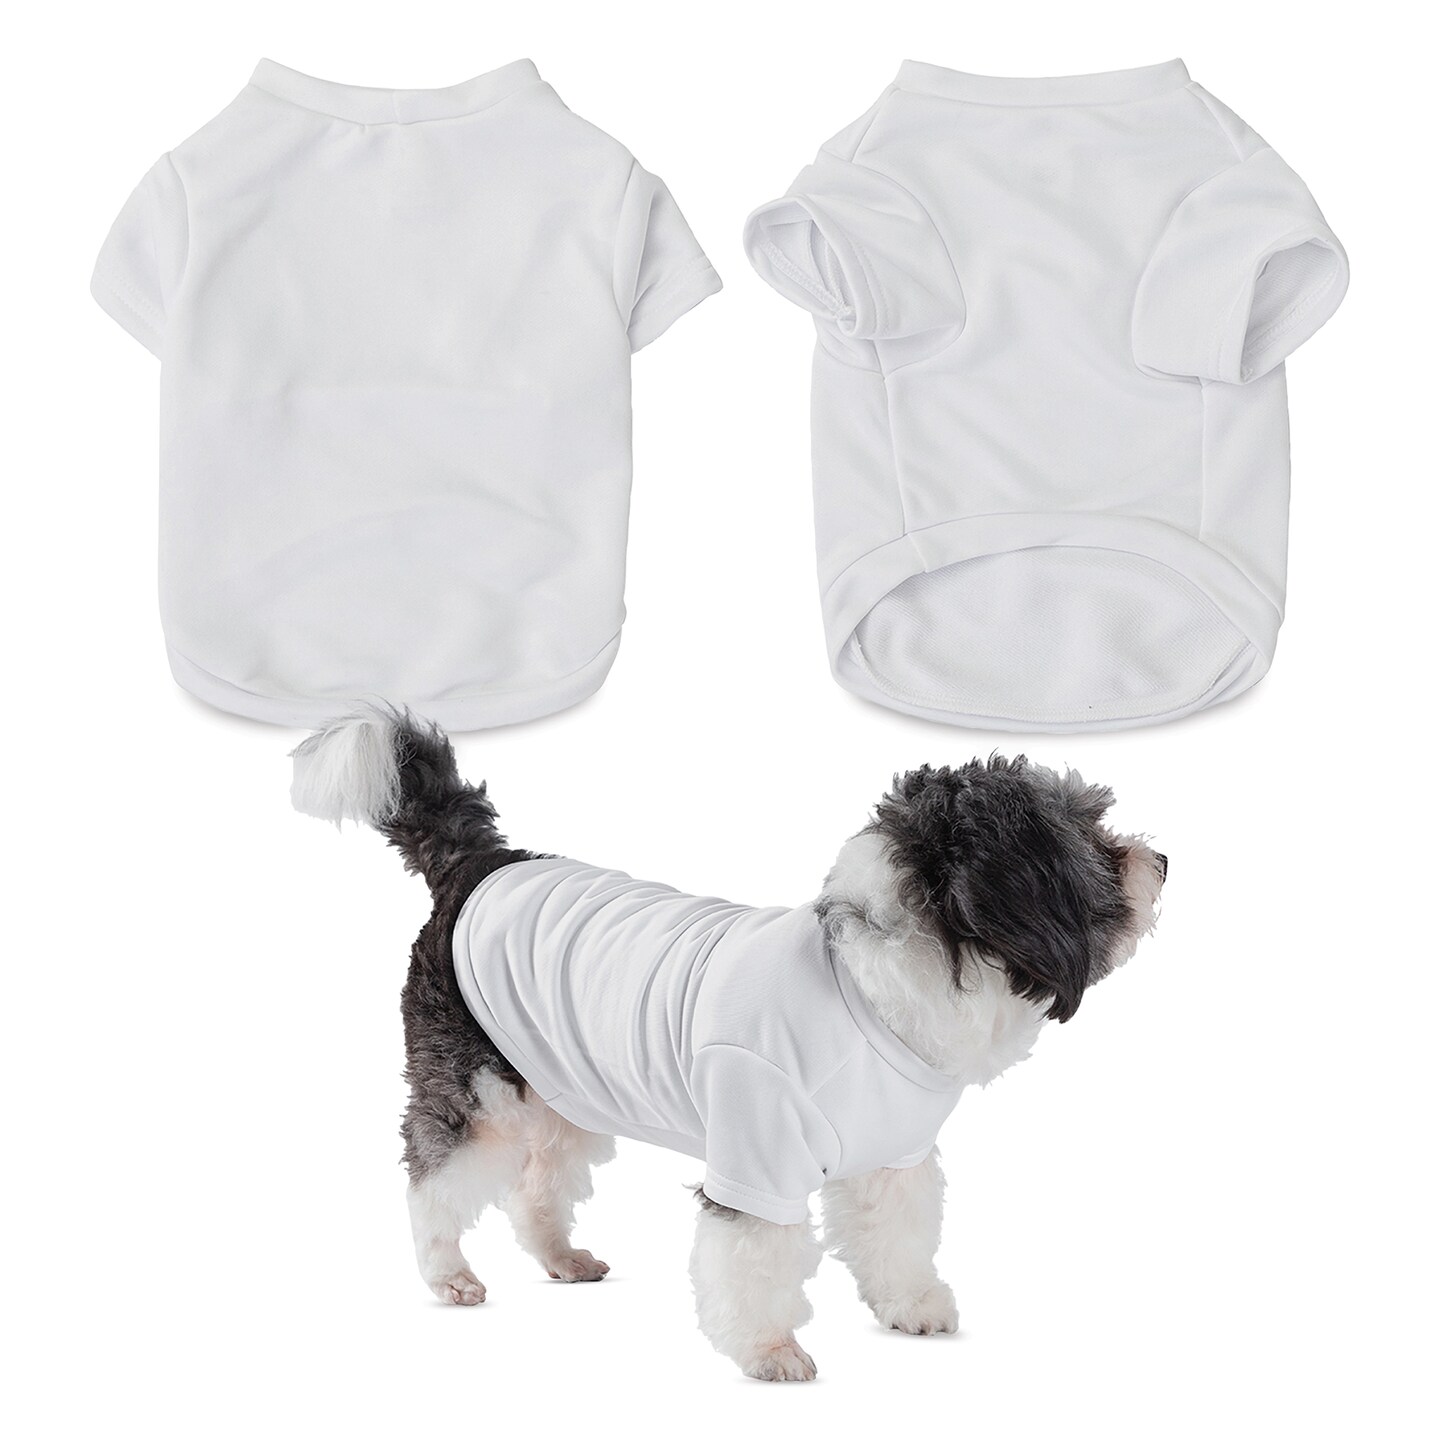 Craft Express Sublimation Printing Pet Product - Pet T-Shirt, Large, Pkg of 2